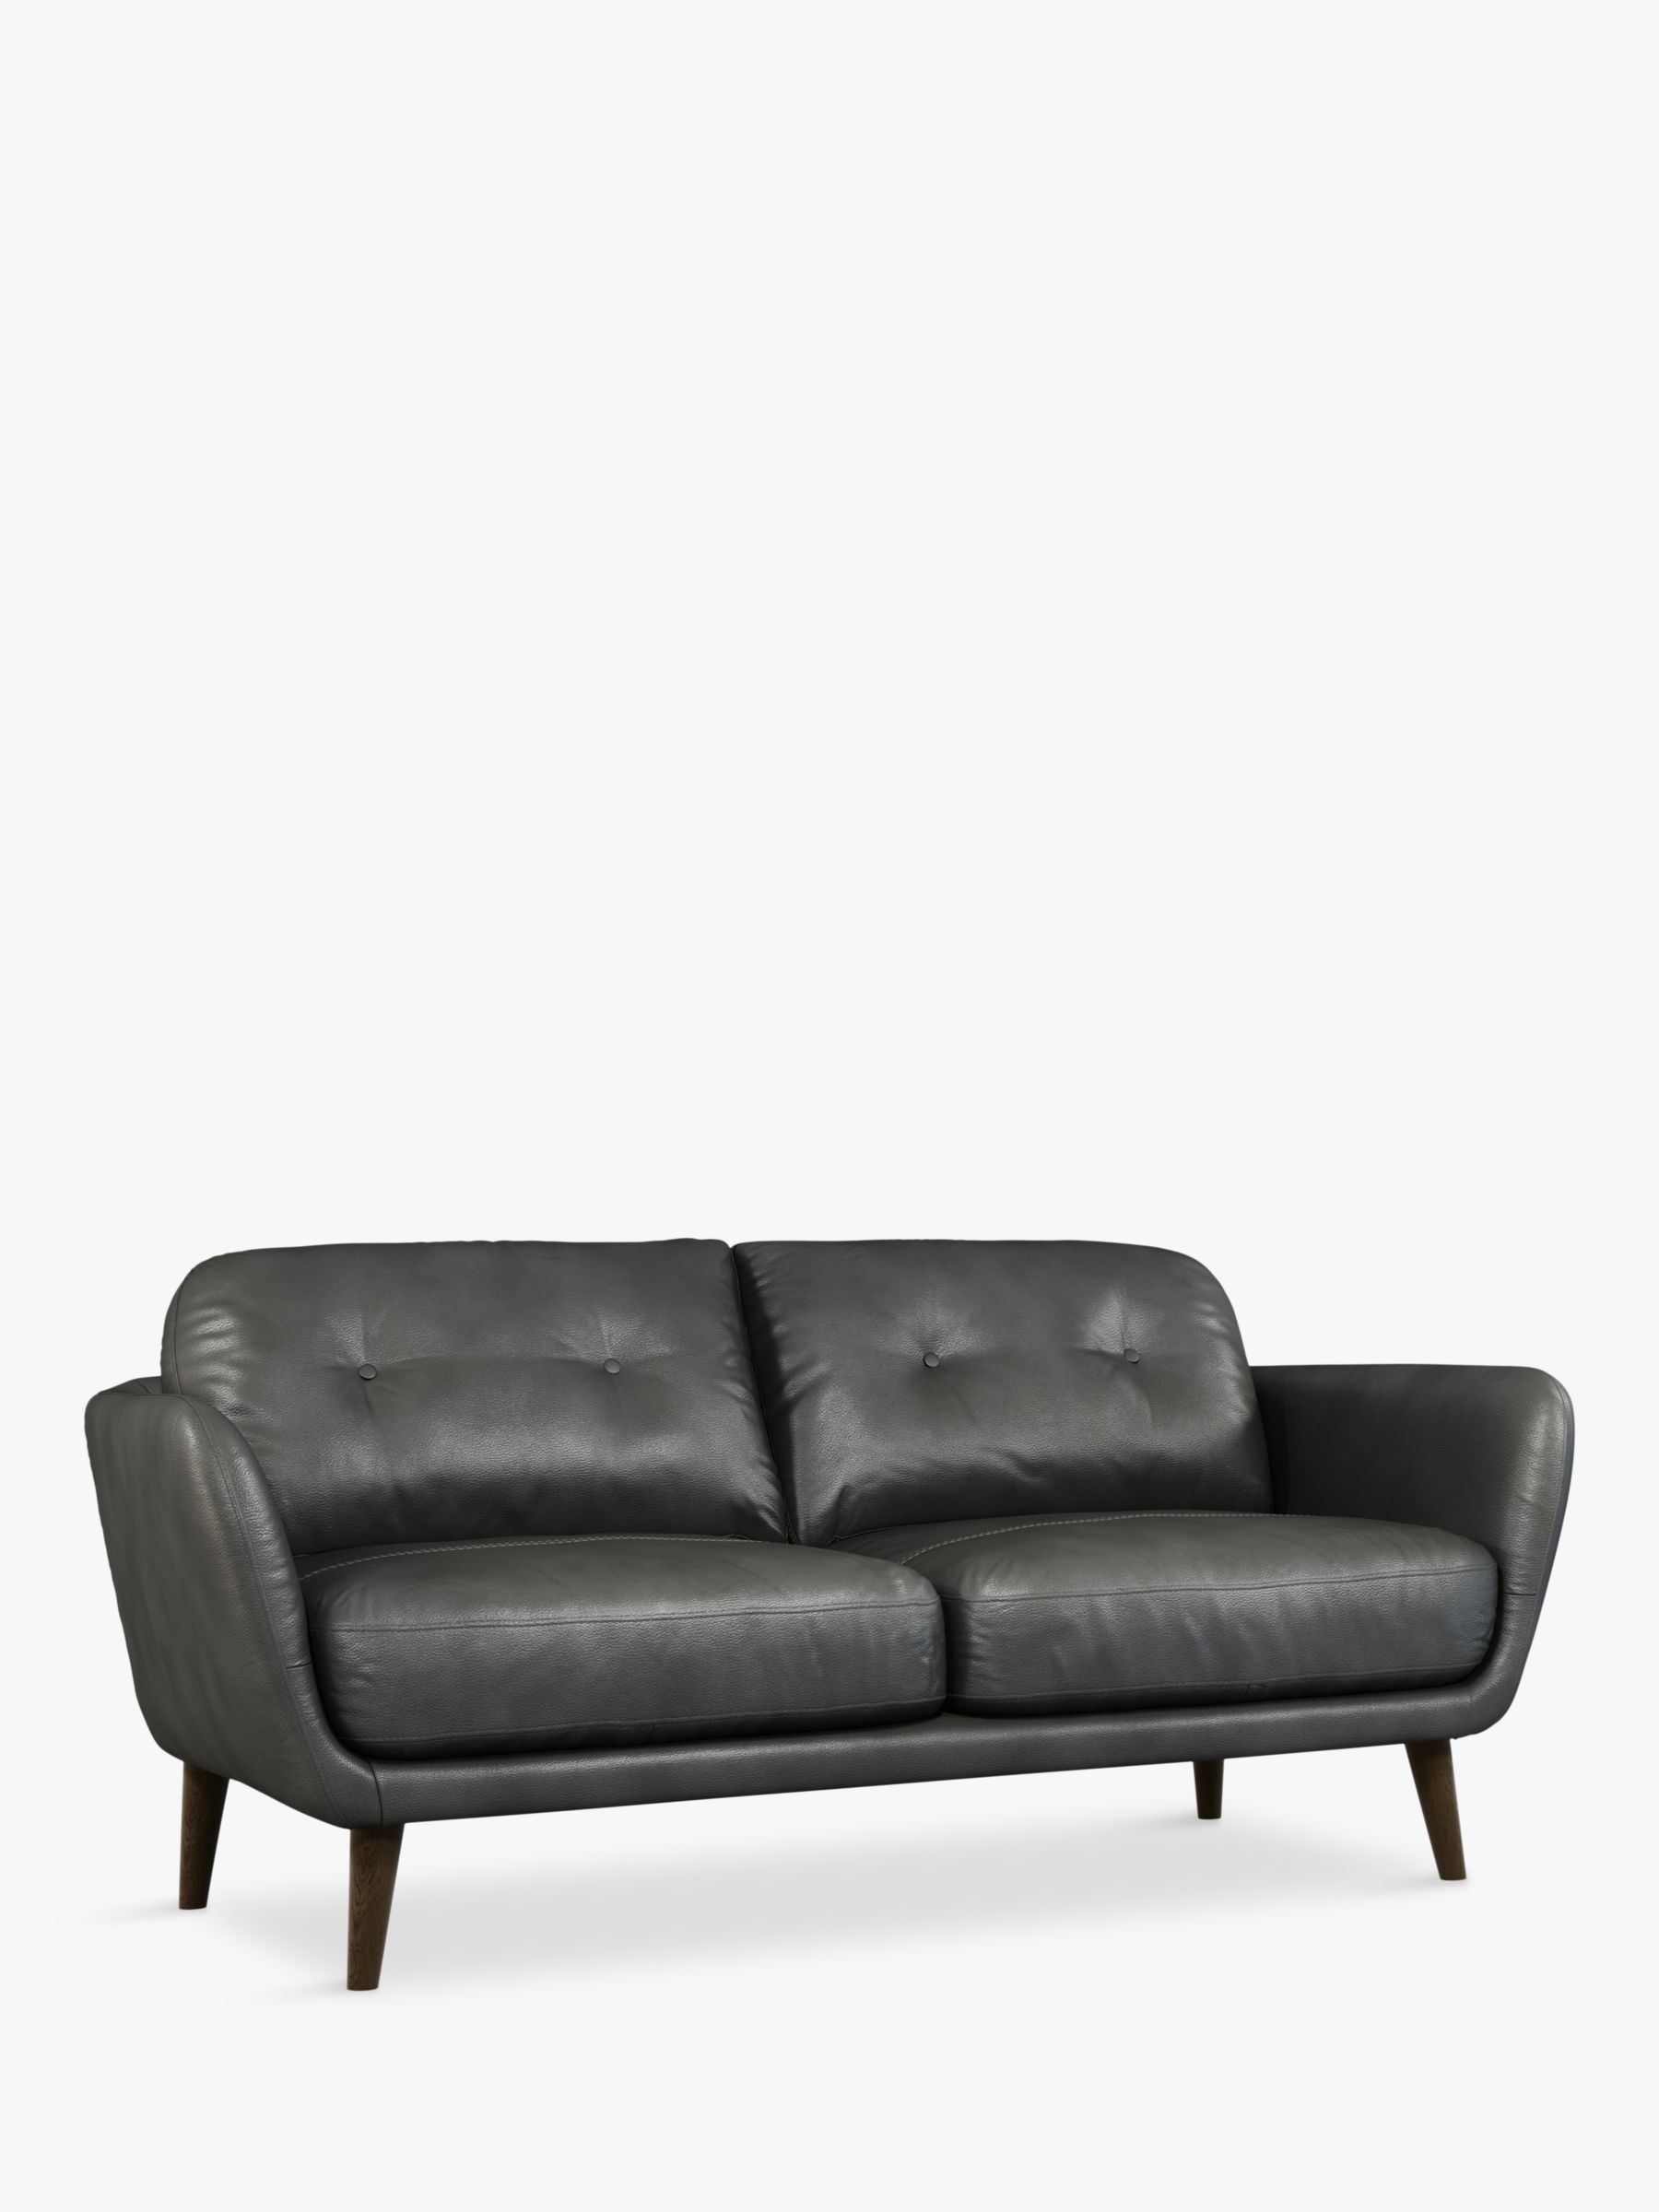 John Lewis Arlo Medium 2 Seater Leather Sofa, Dark Leg, Winchester Anthracite